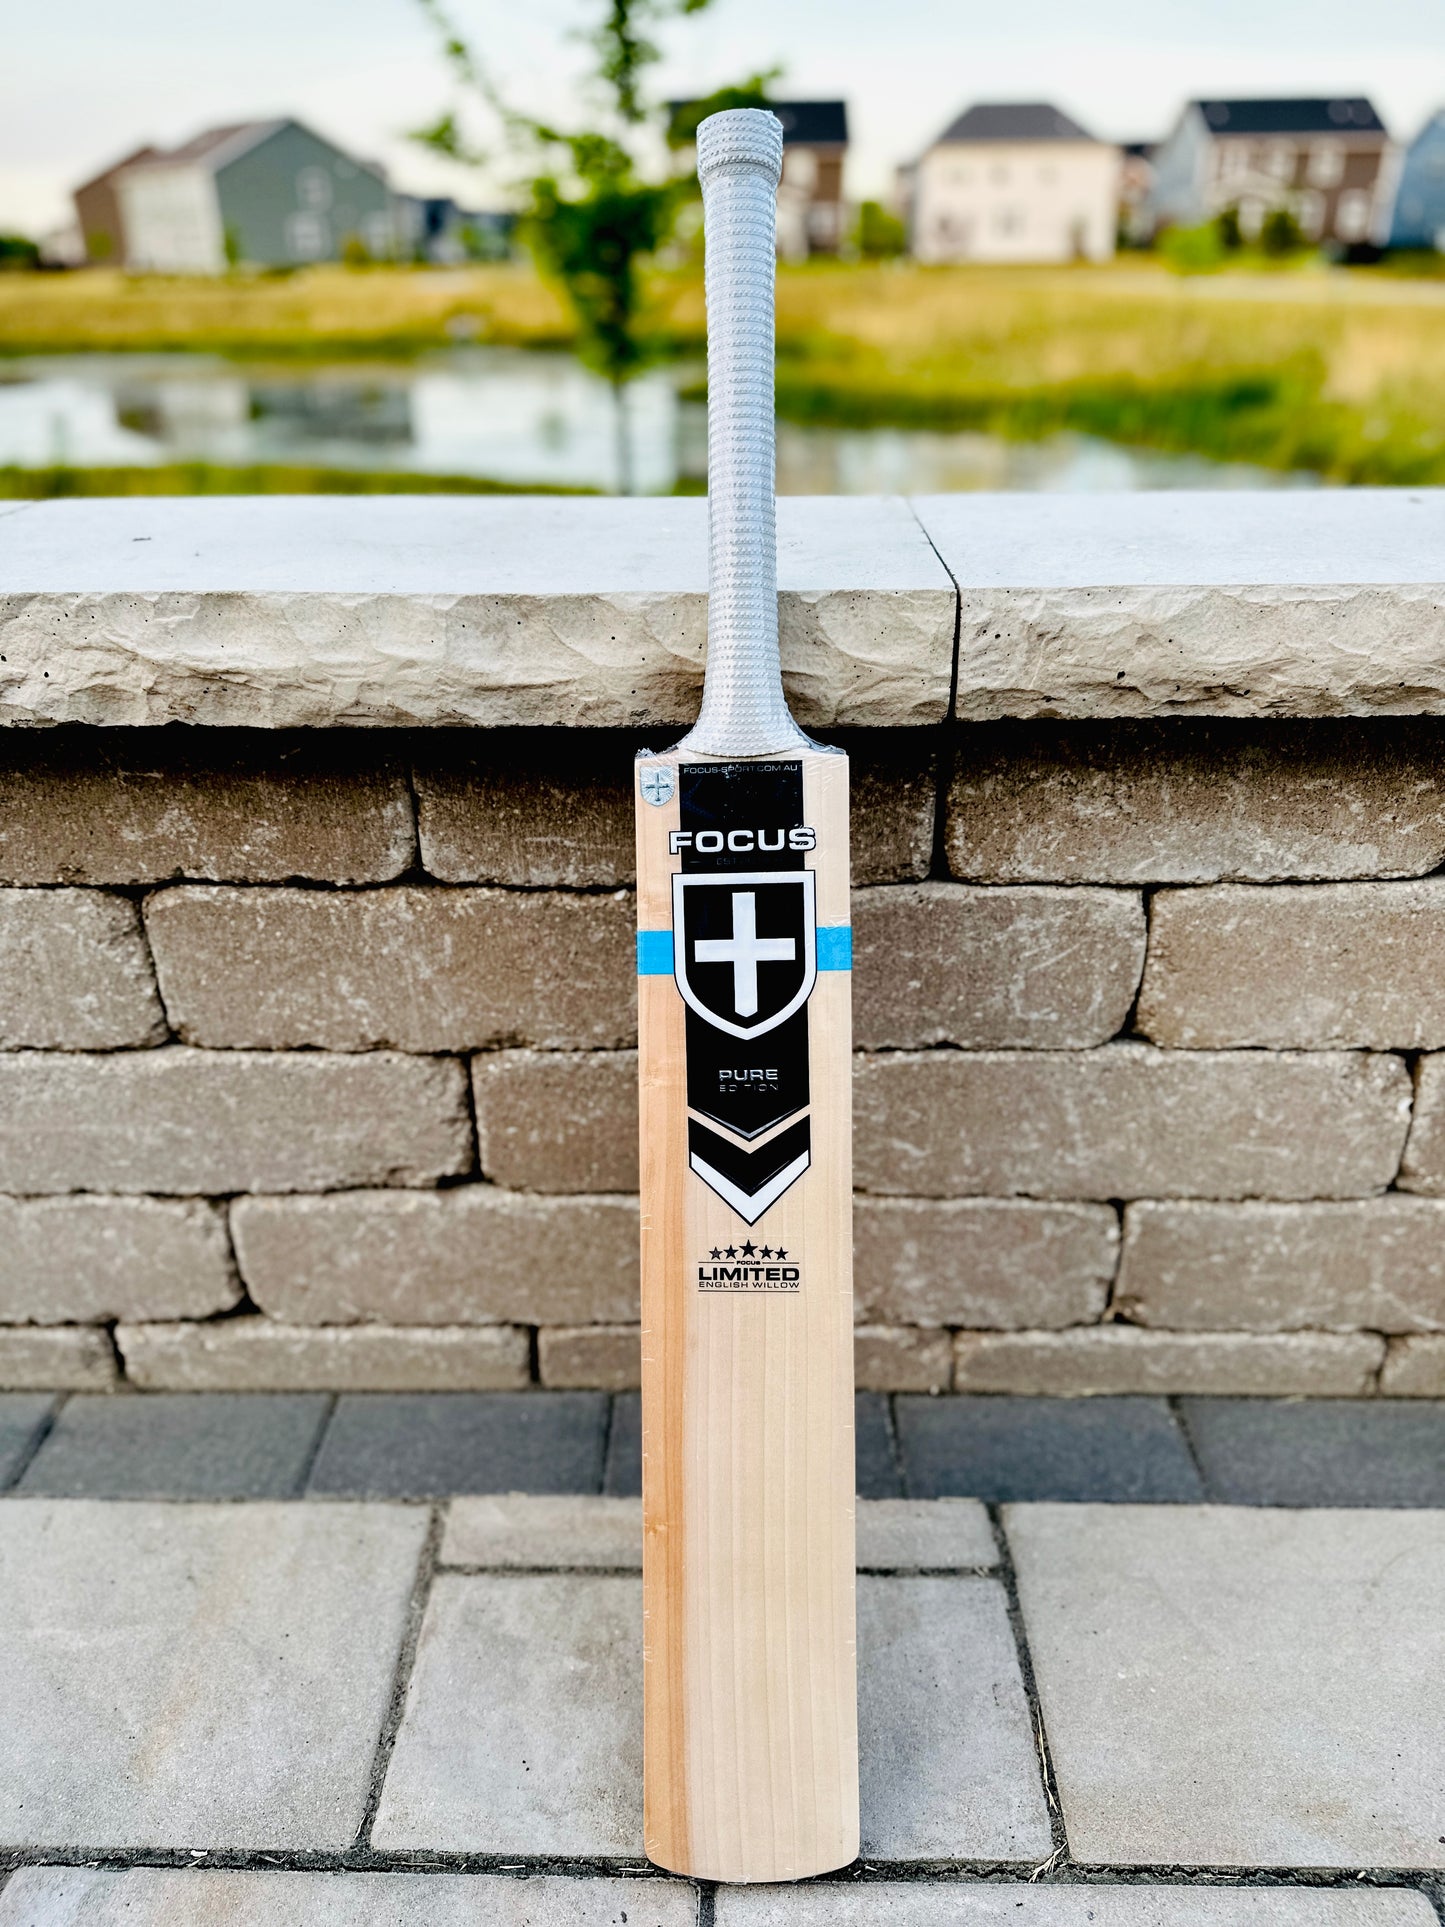 Focus Pure Limited Cricket Bat